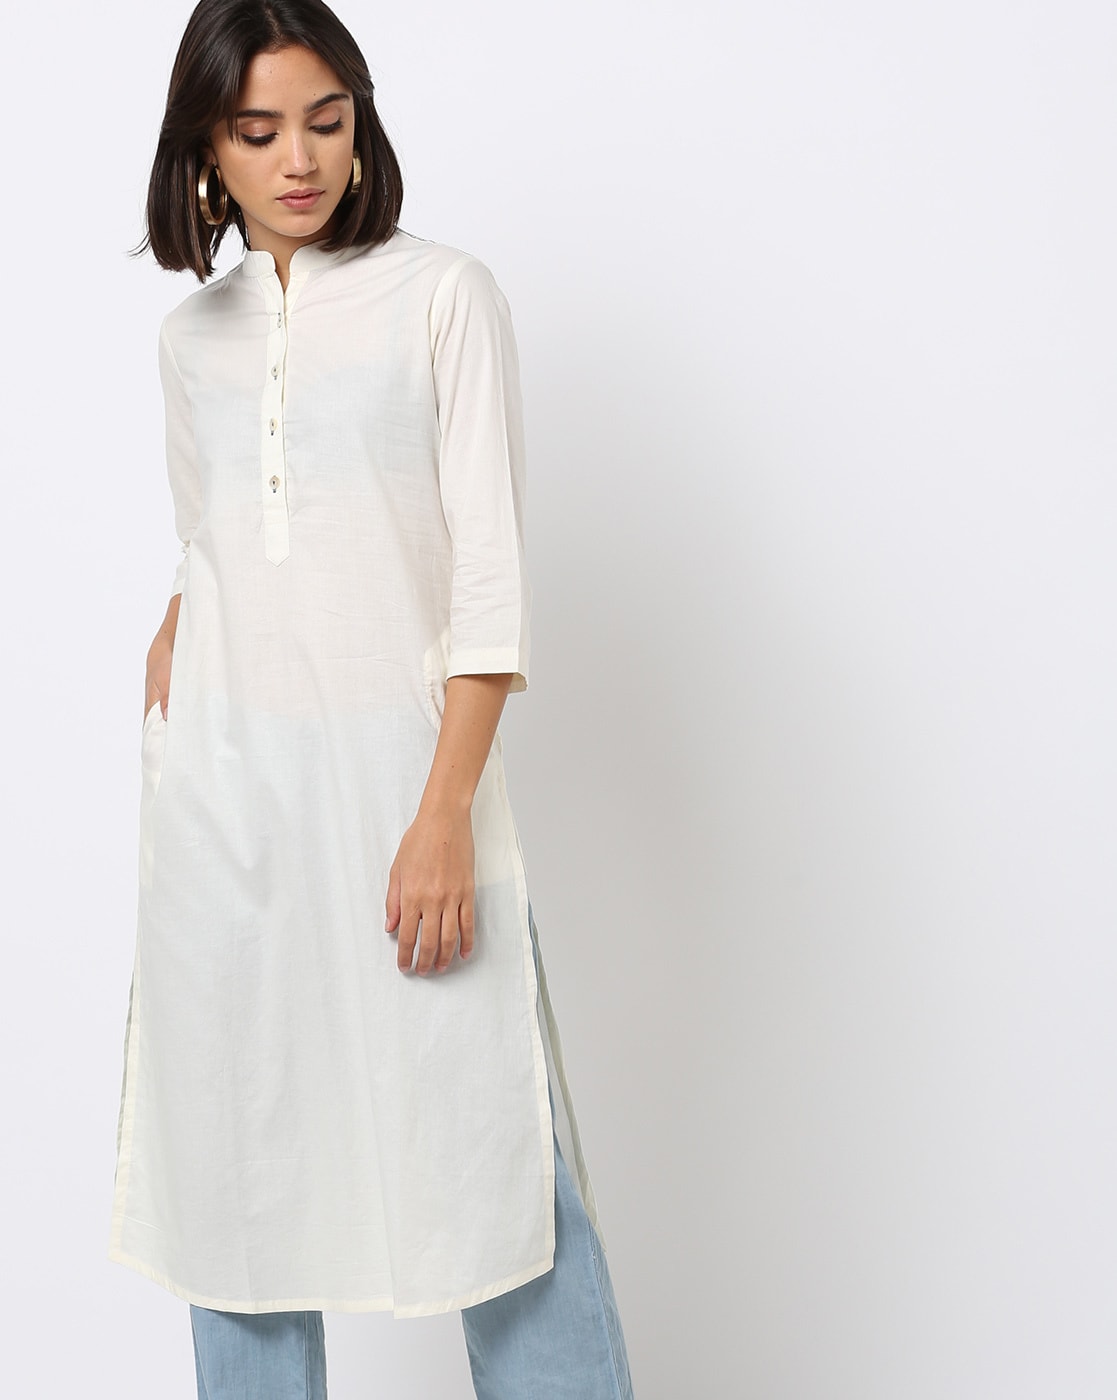 White Kurtas Online: Buy White Kurta for Women at Best Price | InWeave-saigonsouth.com.vn